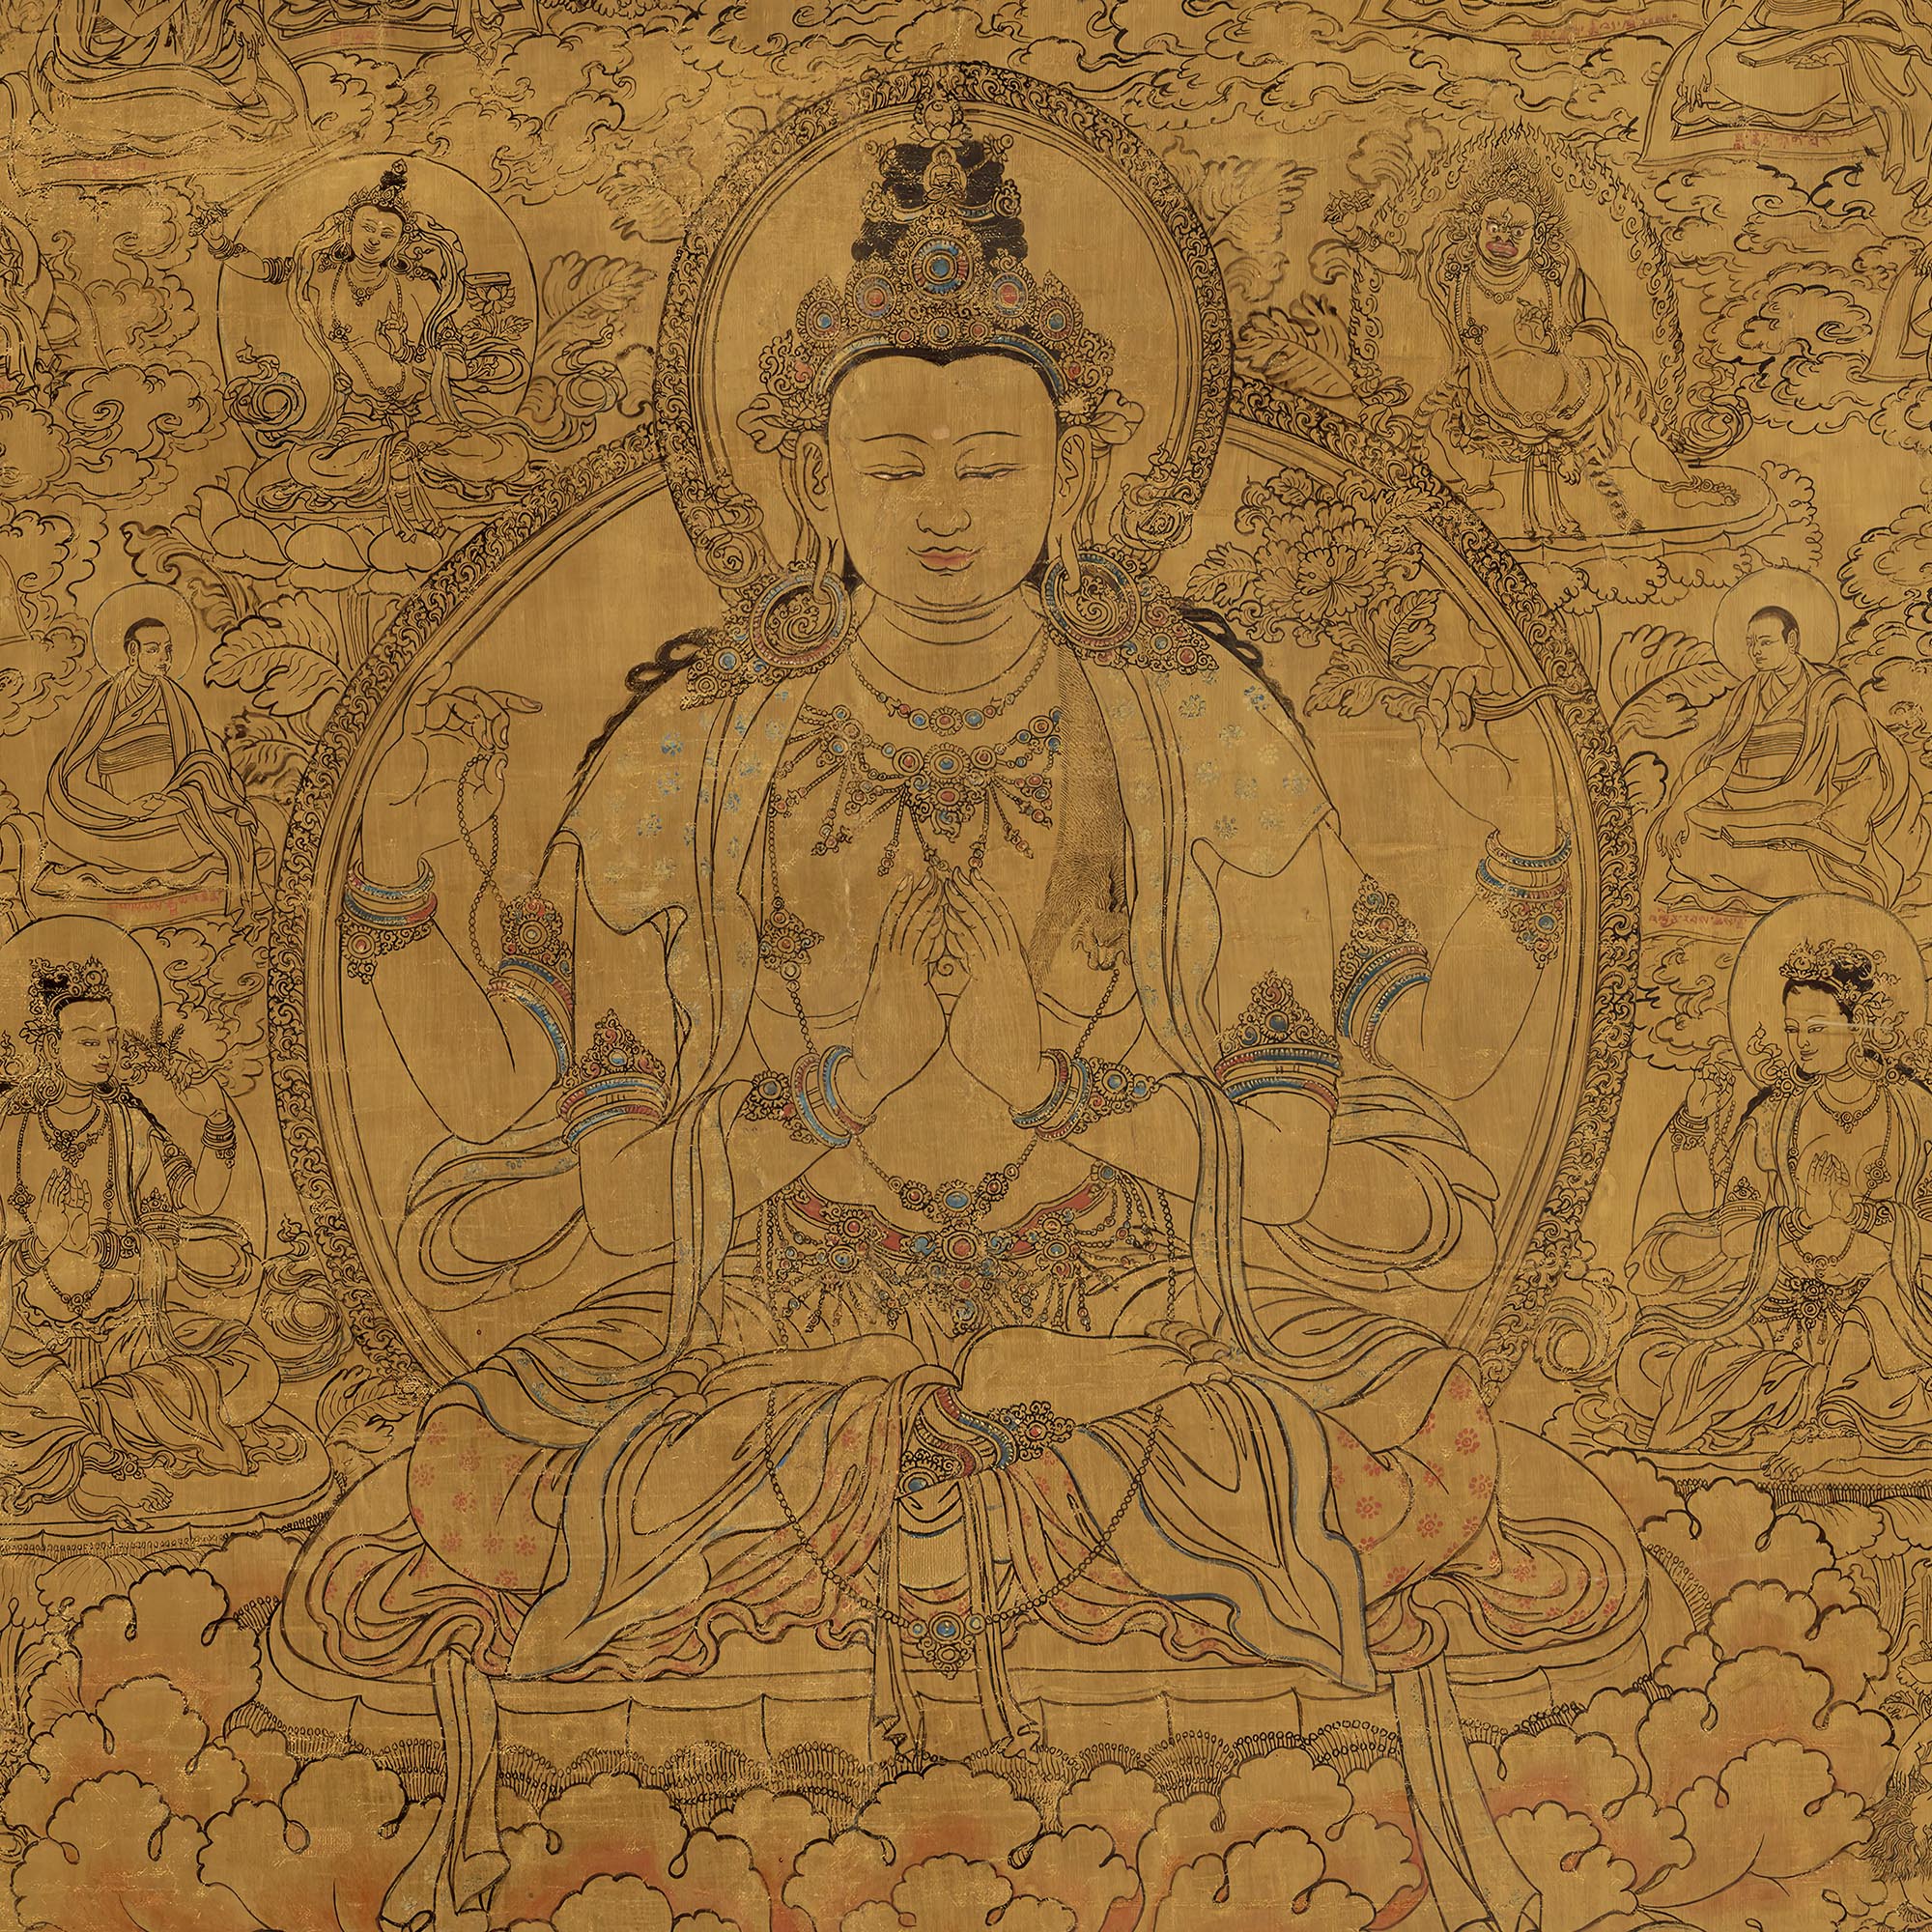 Fine art Framed Avalokiteshvara Buddha of Compassion | Guan Yin, Kuan Yin Bodhisattva | Meditation Mindfulness Yoga Framed Art Print